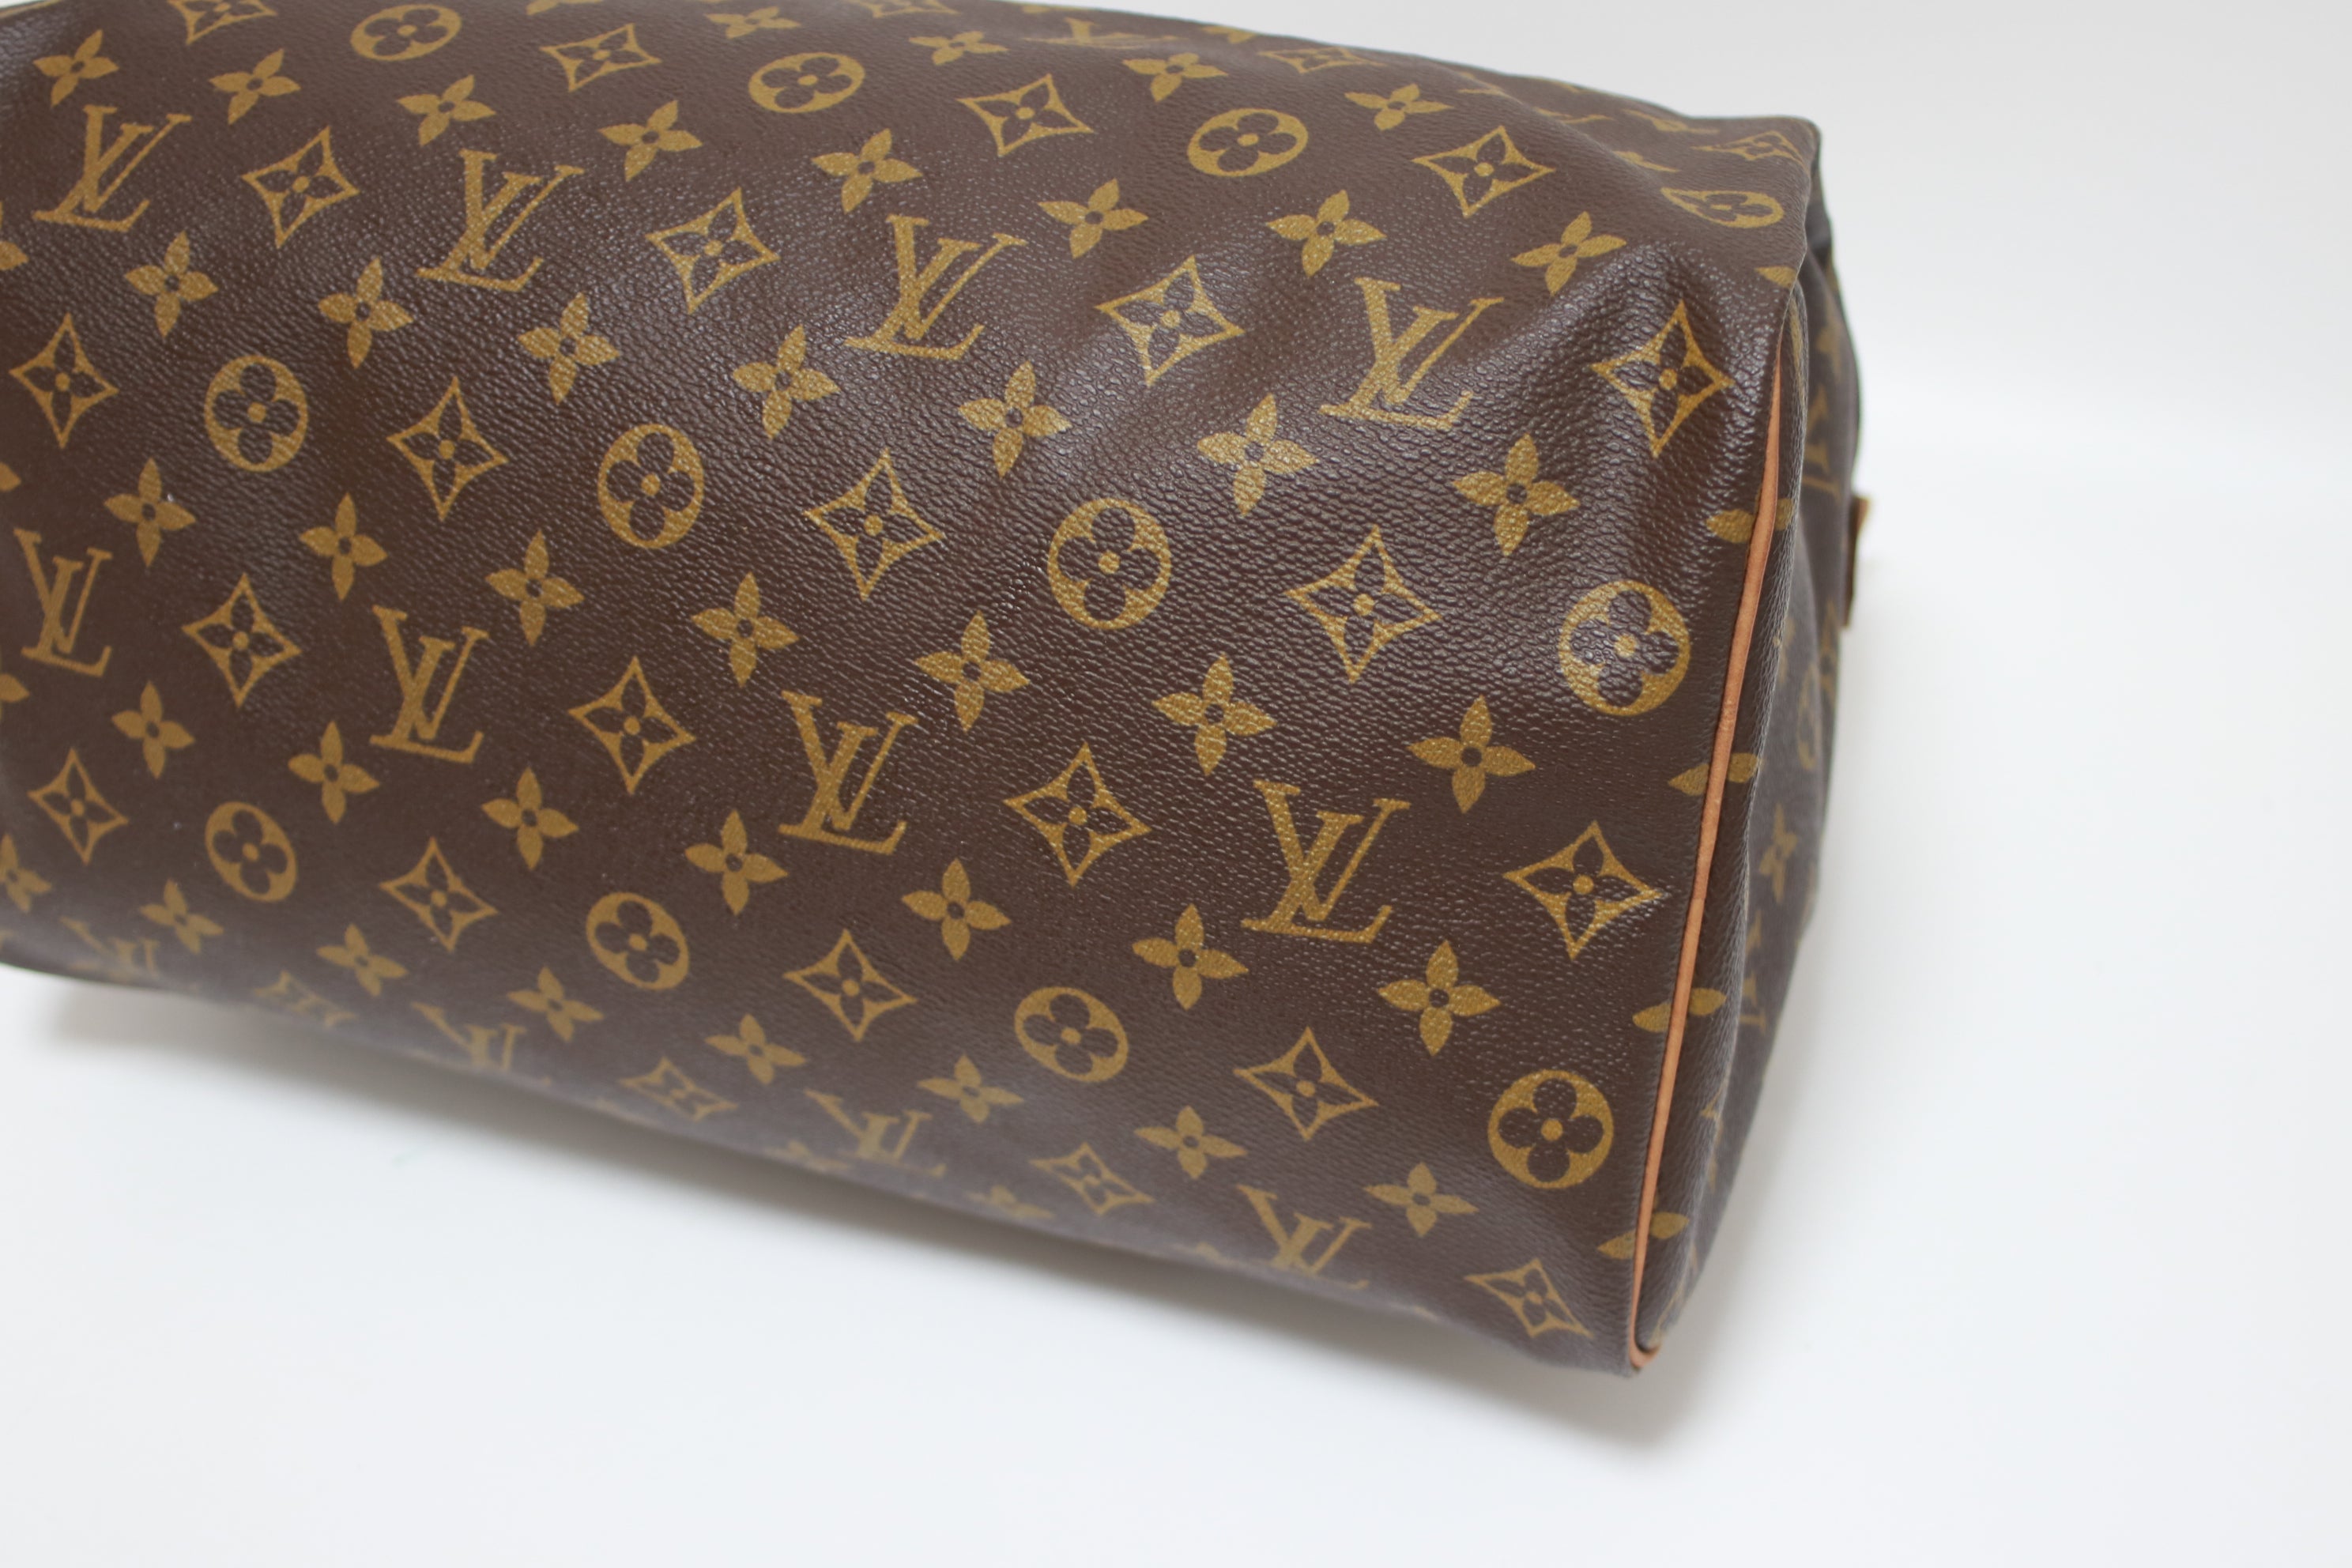 Louis Vuitton Speedy 35 Handbag Used (7400)